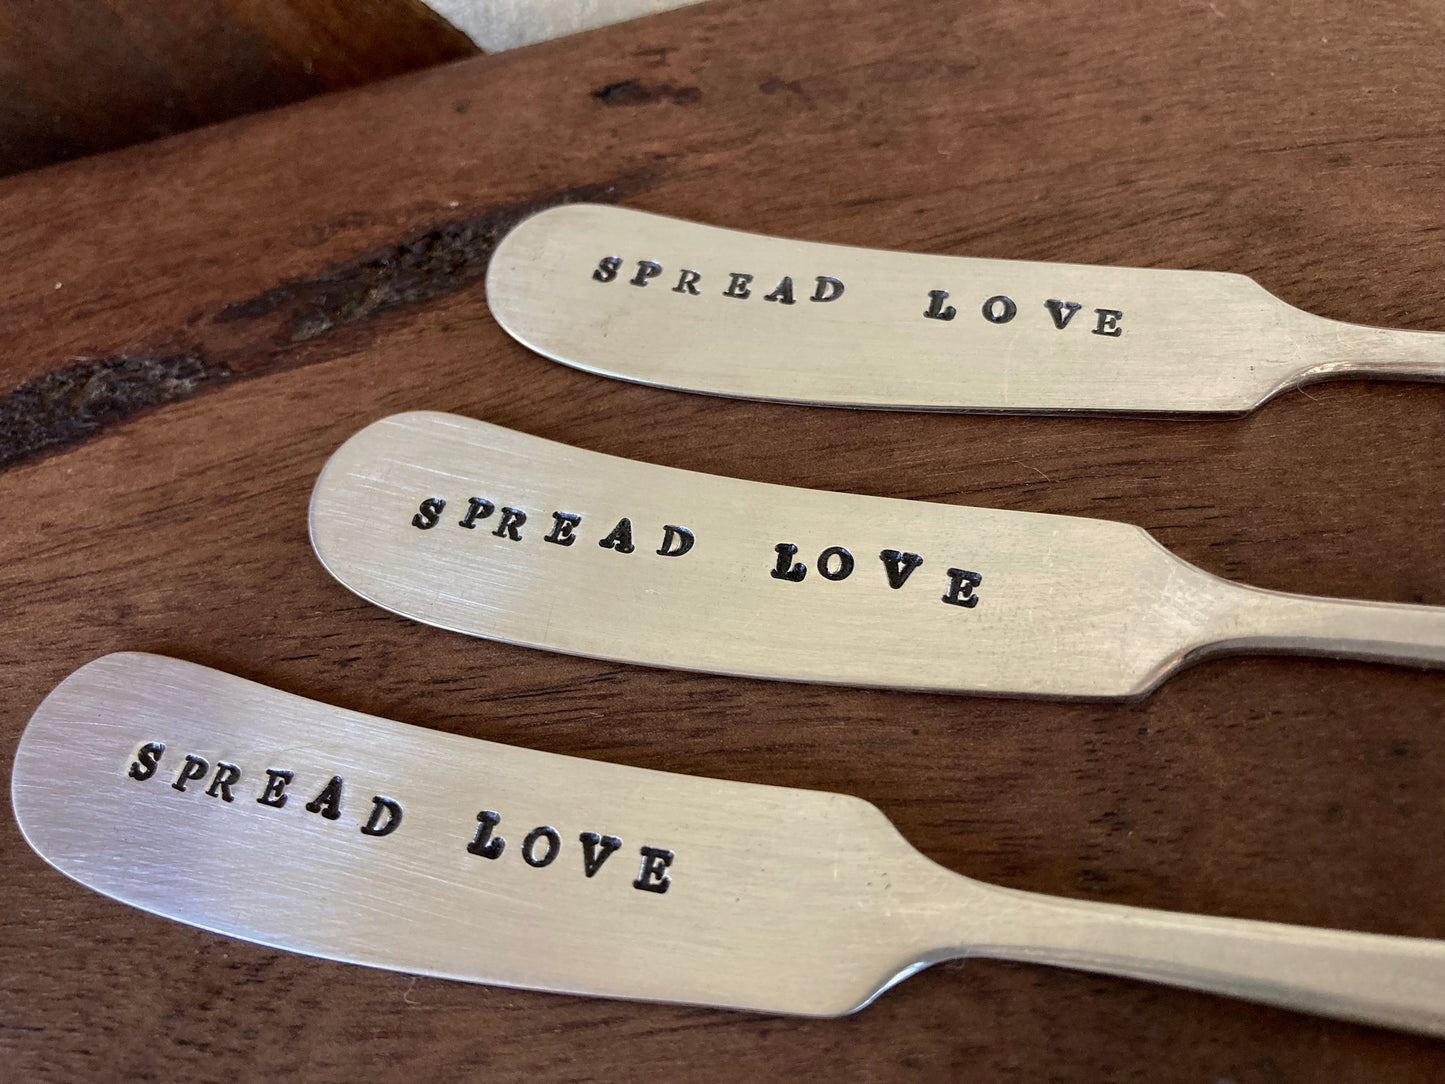 Spread Love letter-stamped knife